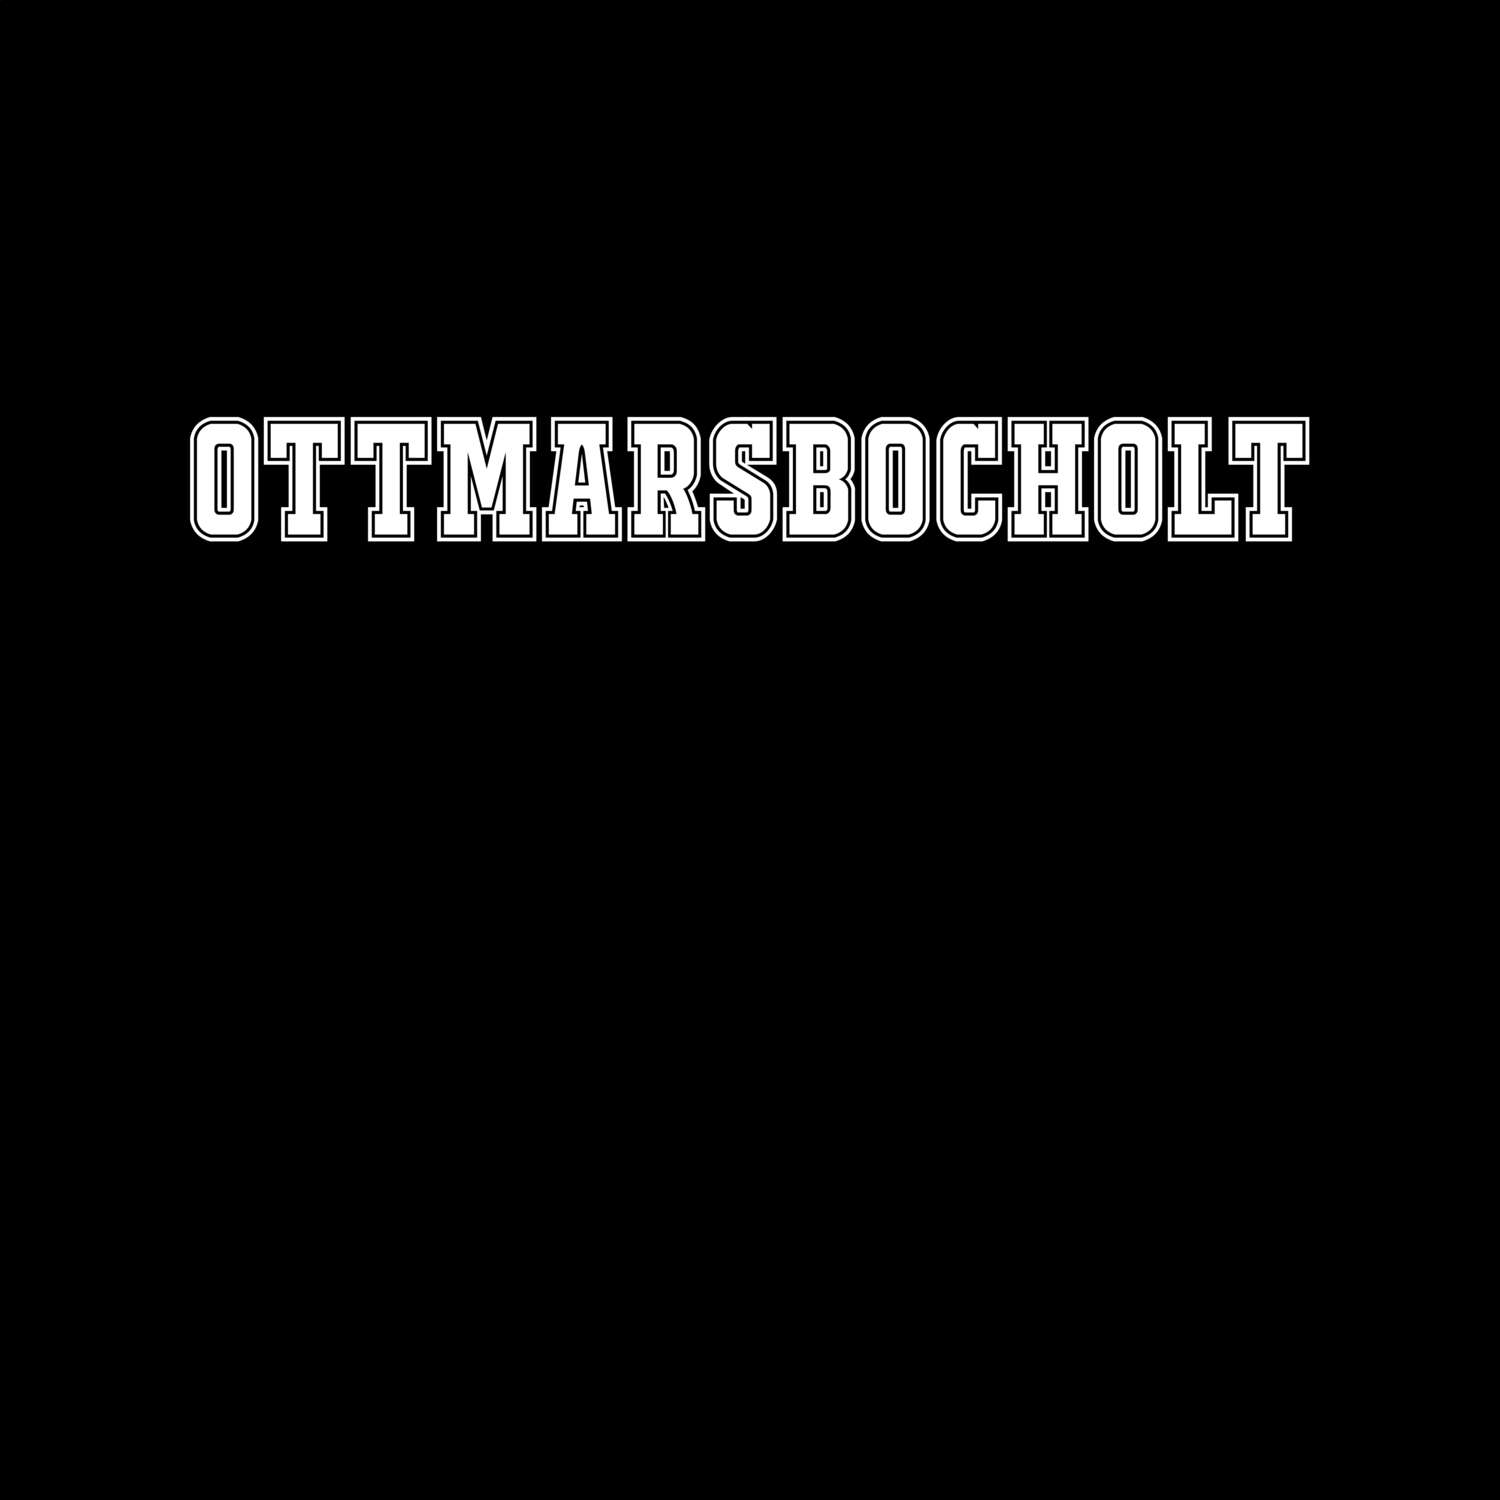 Ottmarsbocholt T-Shirt »Classic«